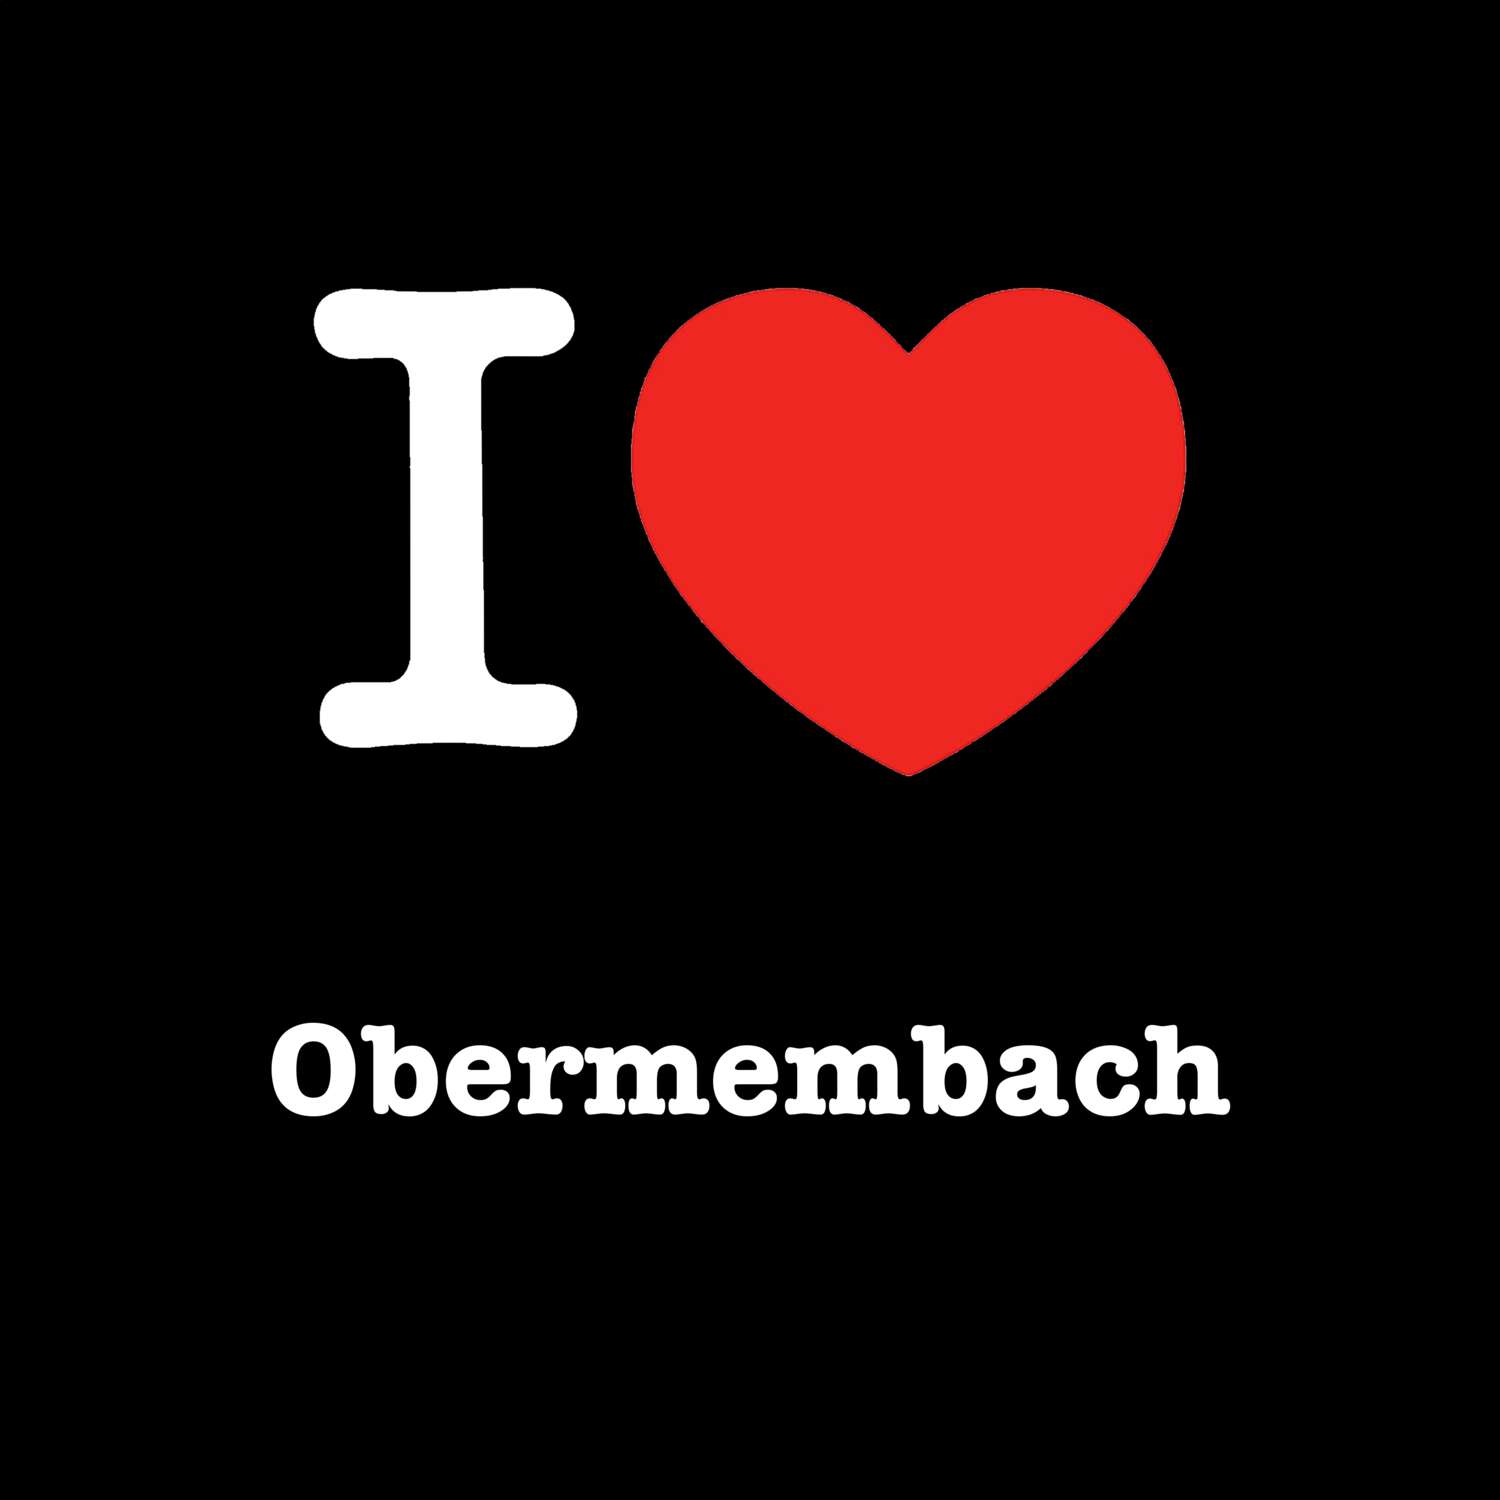 Obermembach T-Shirt »I love«